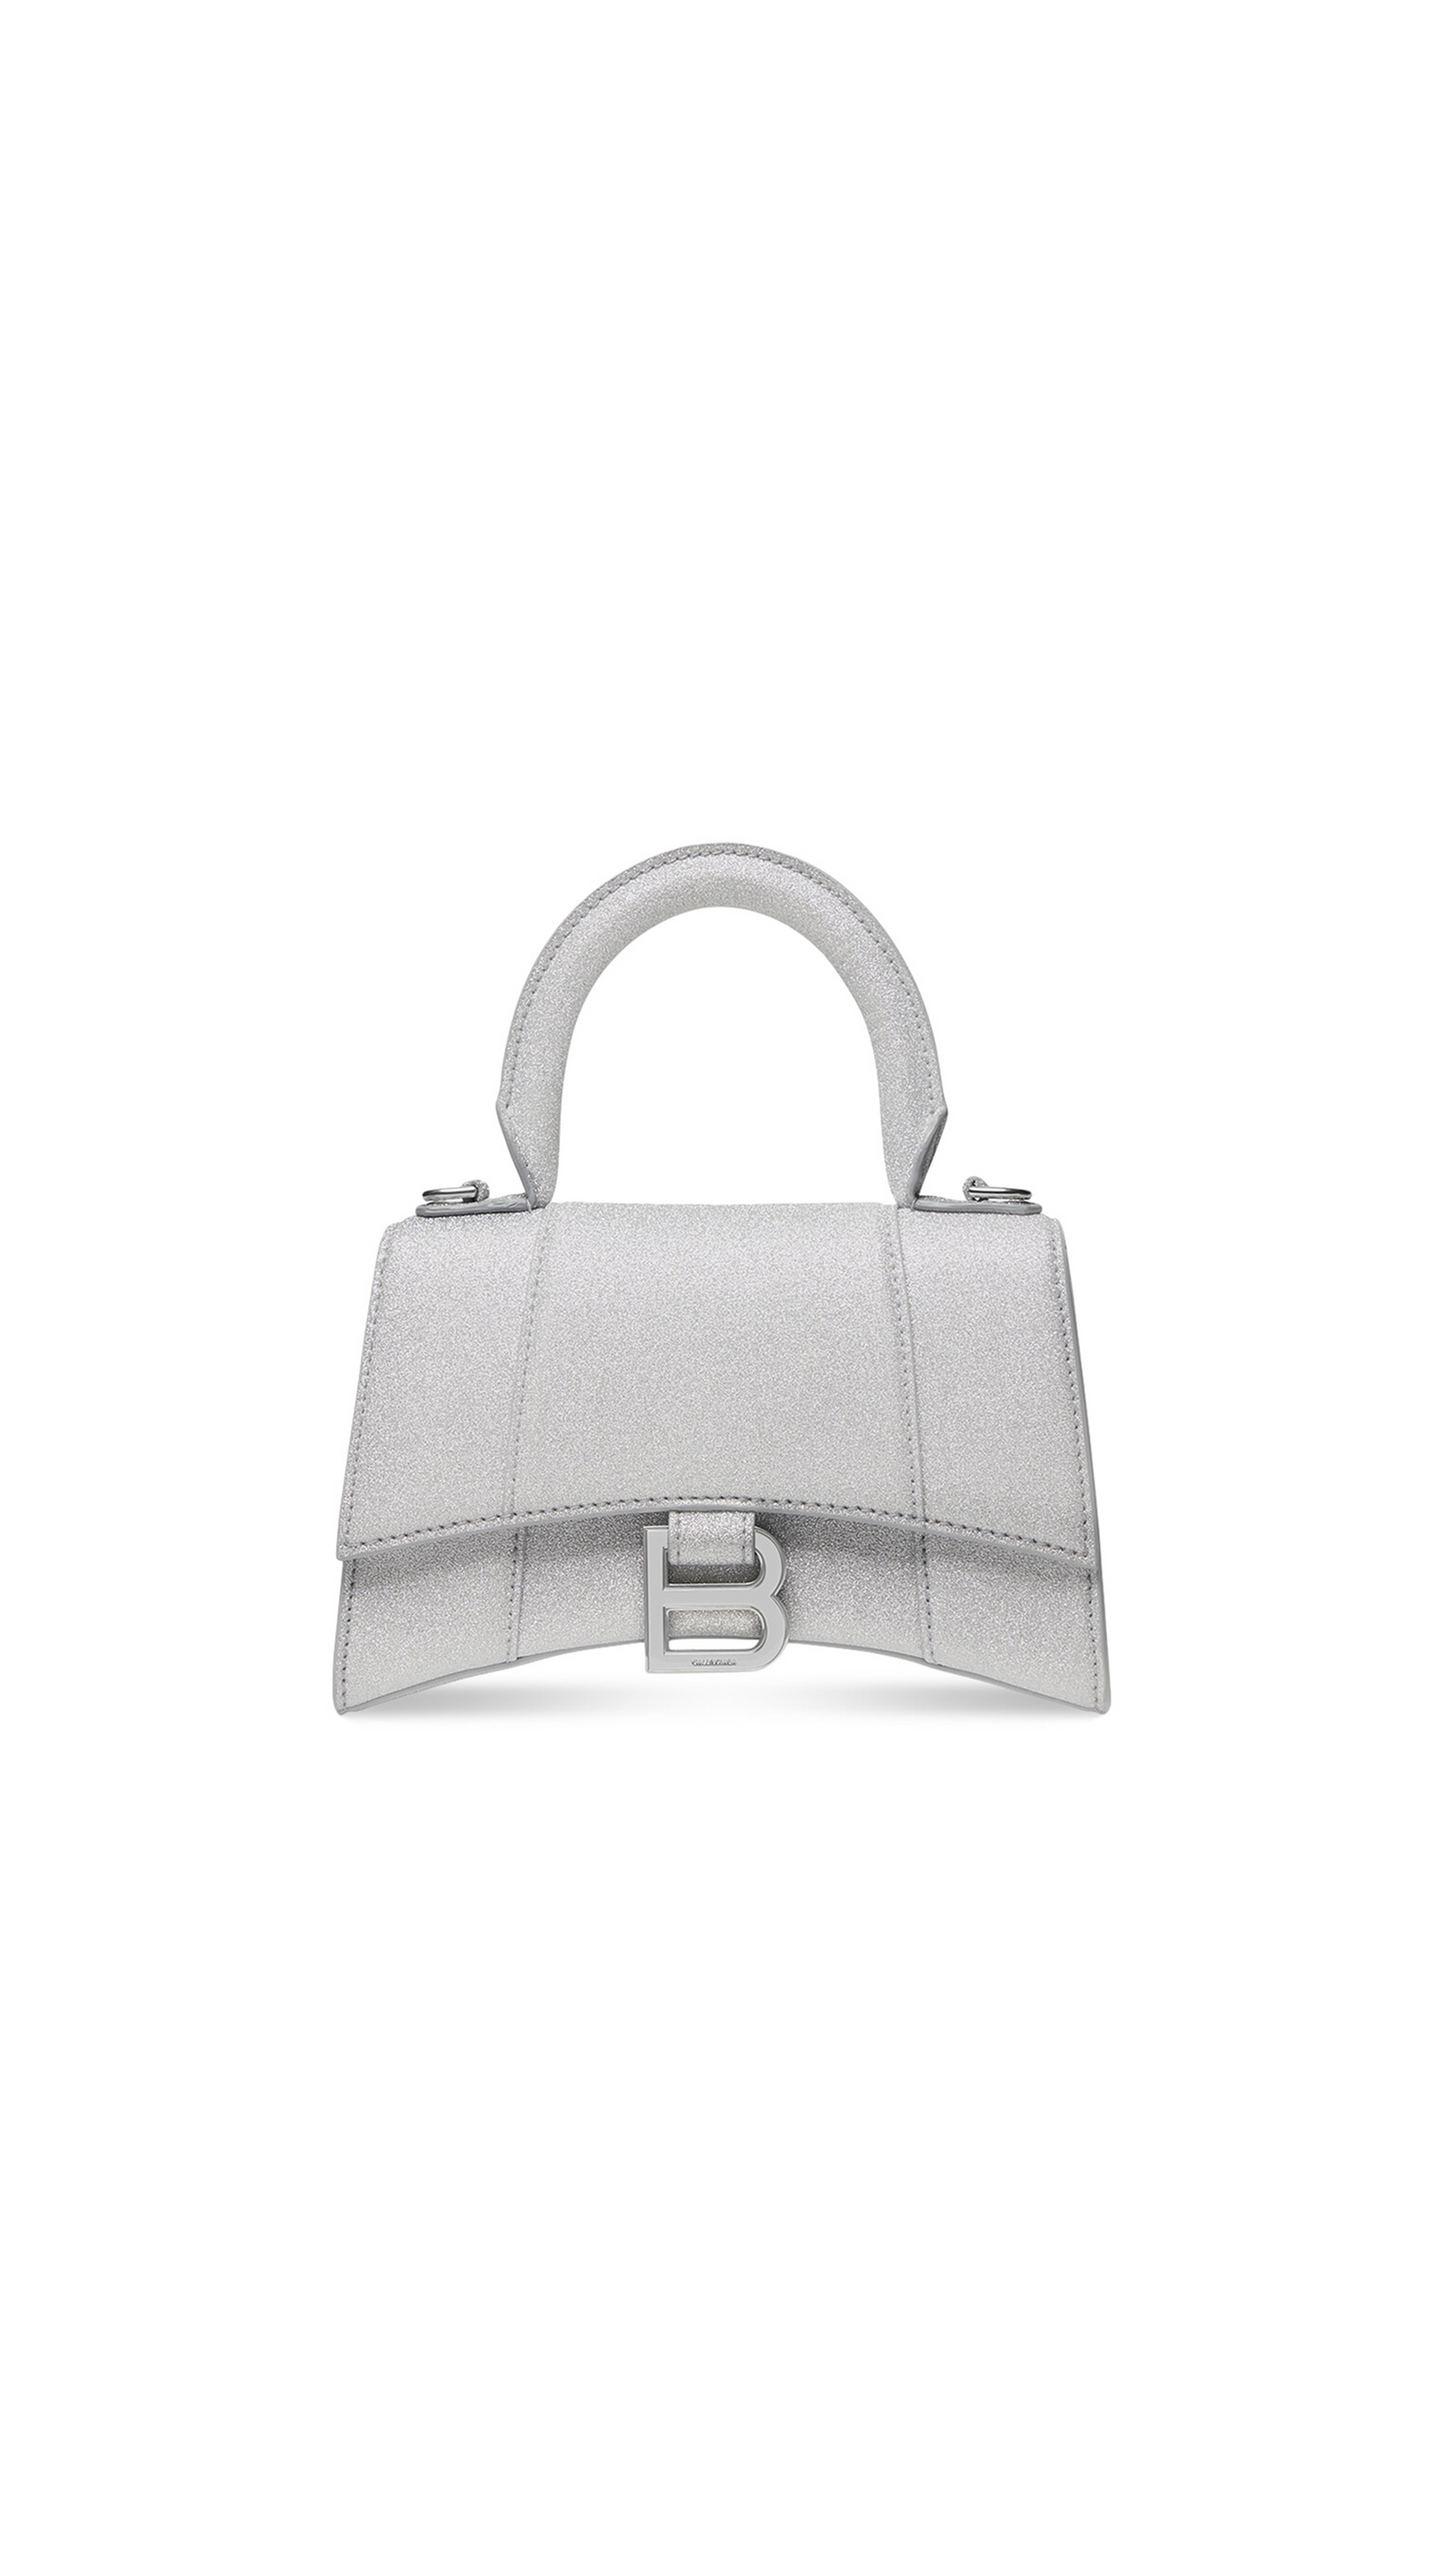 Women's Hourglass Xs Handbag in Sparkling Fabric - Silver